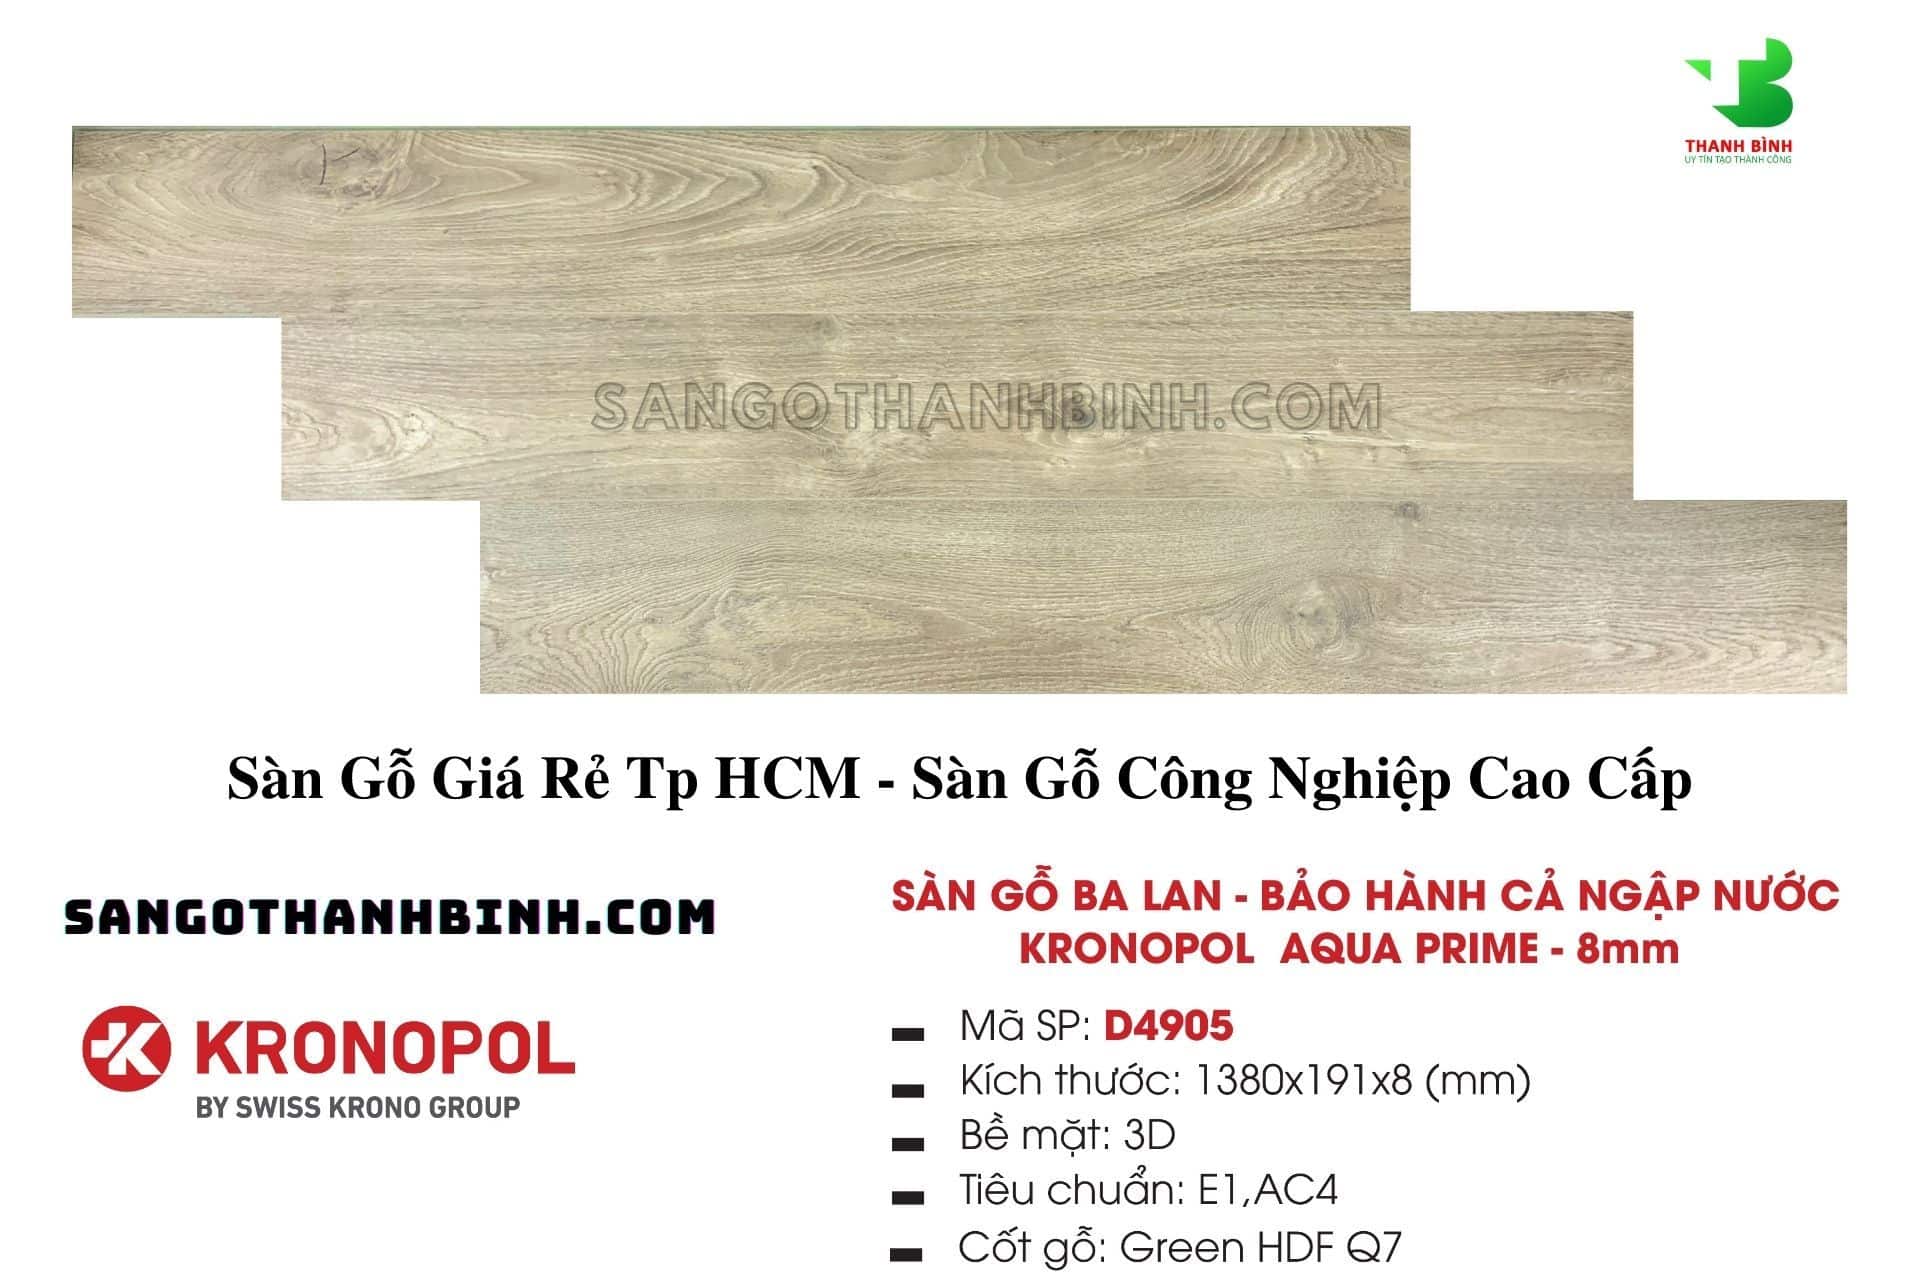 San Go Kronopol Ba Lan Aqua Prime 8mm Ma D49052